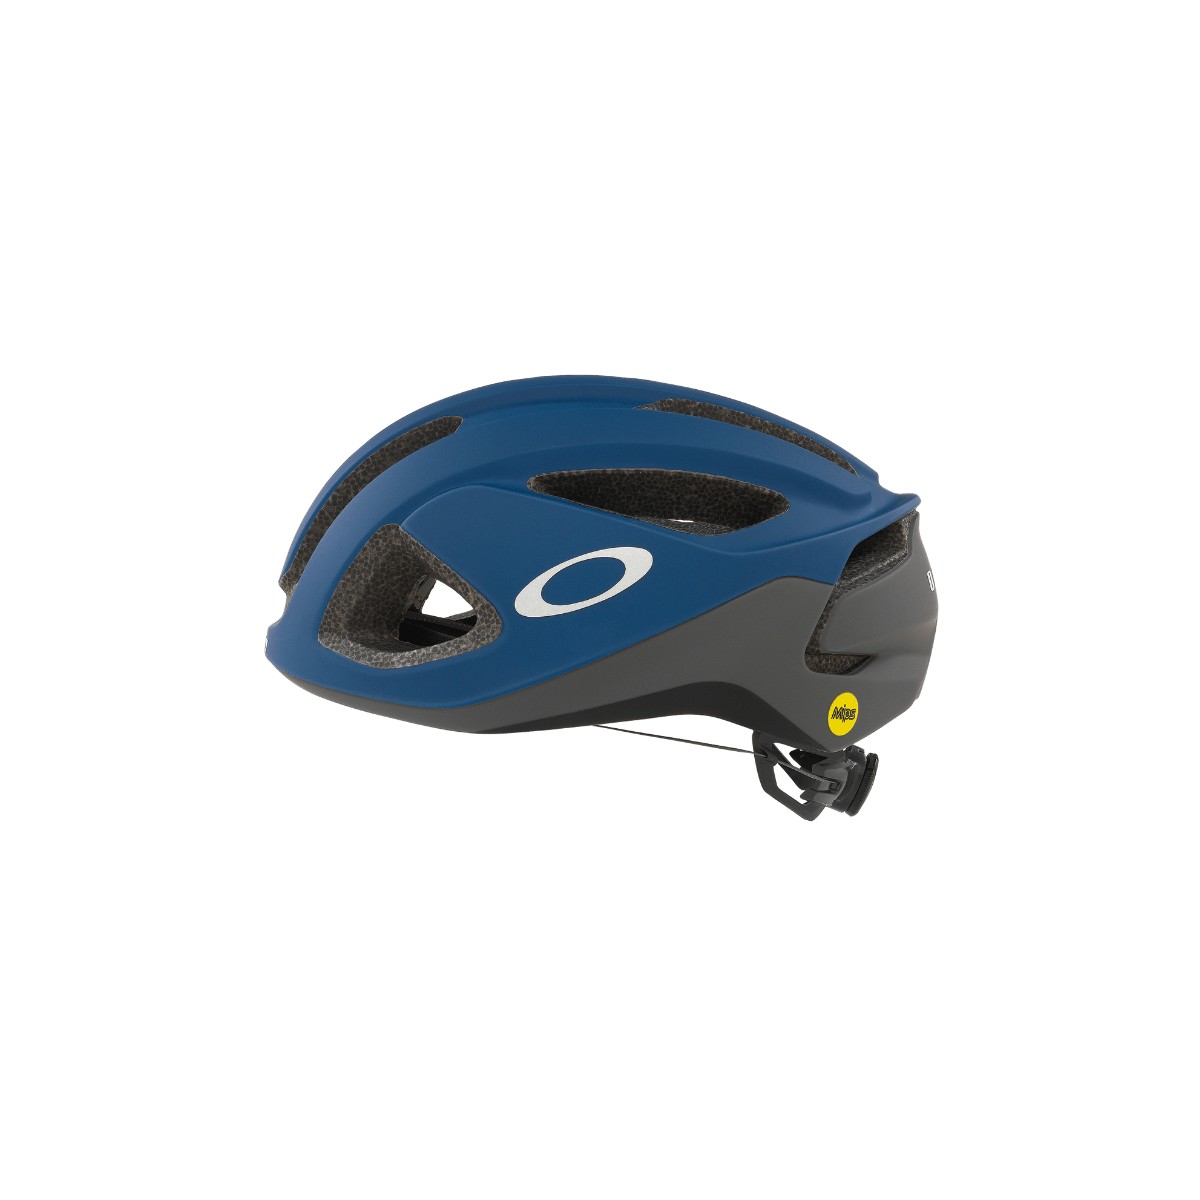 Oakley ARO3 MIPS Helmet Navy Blue, Size M (54-58 cm)